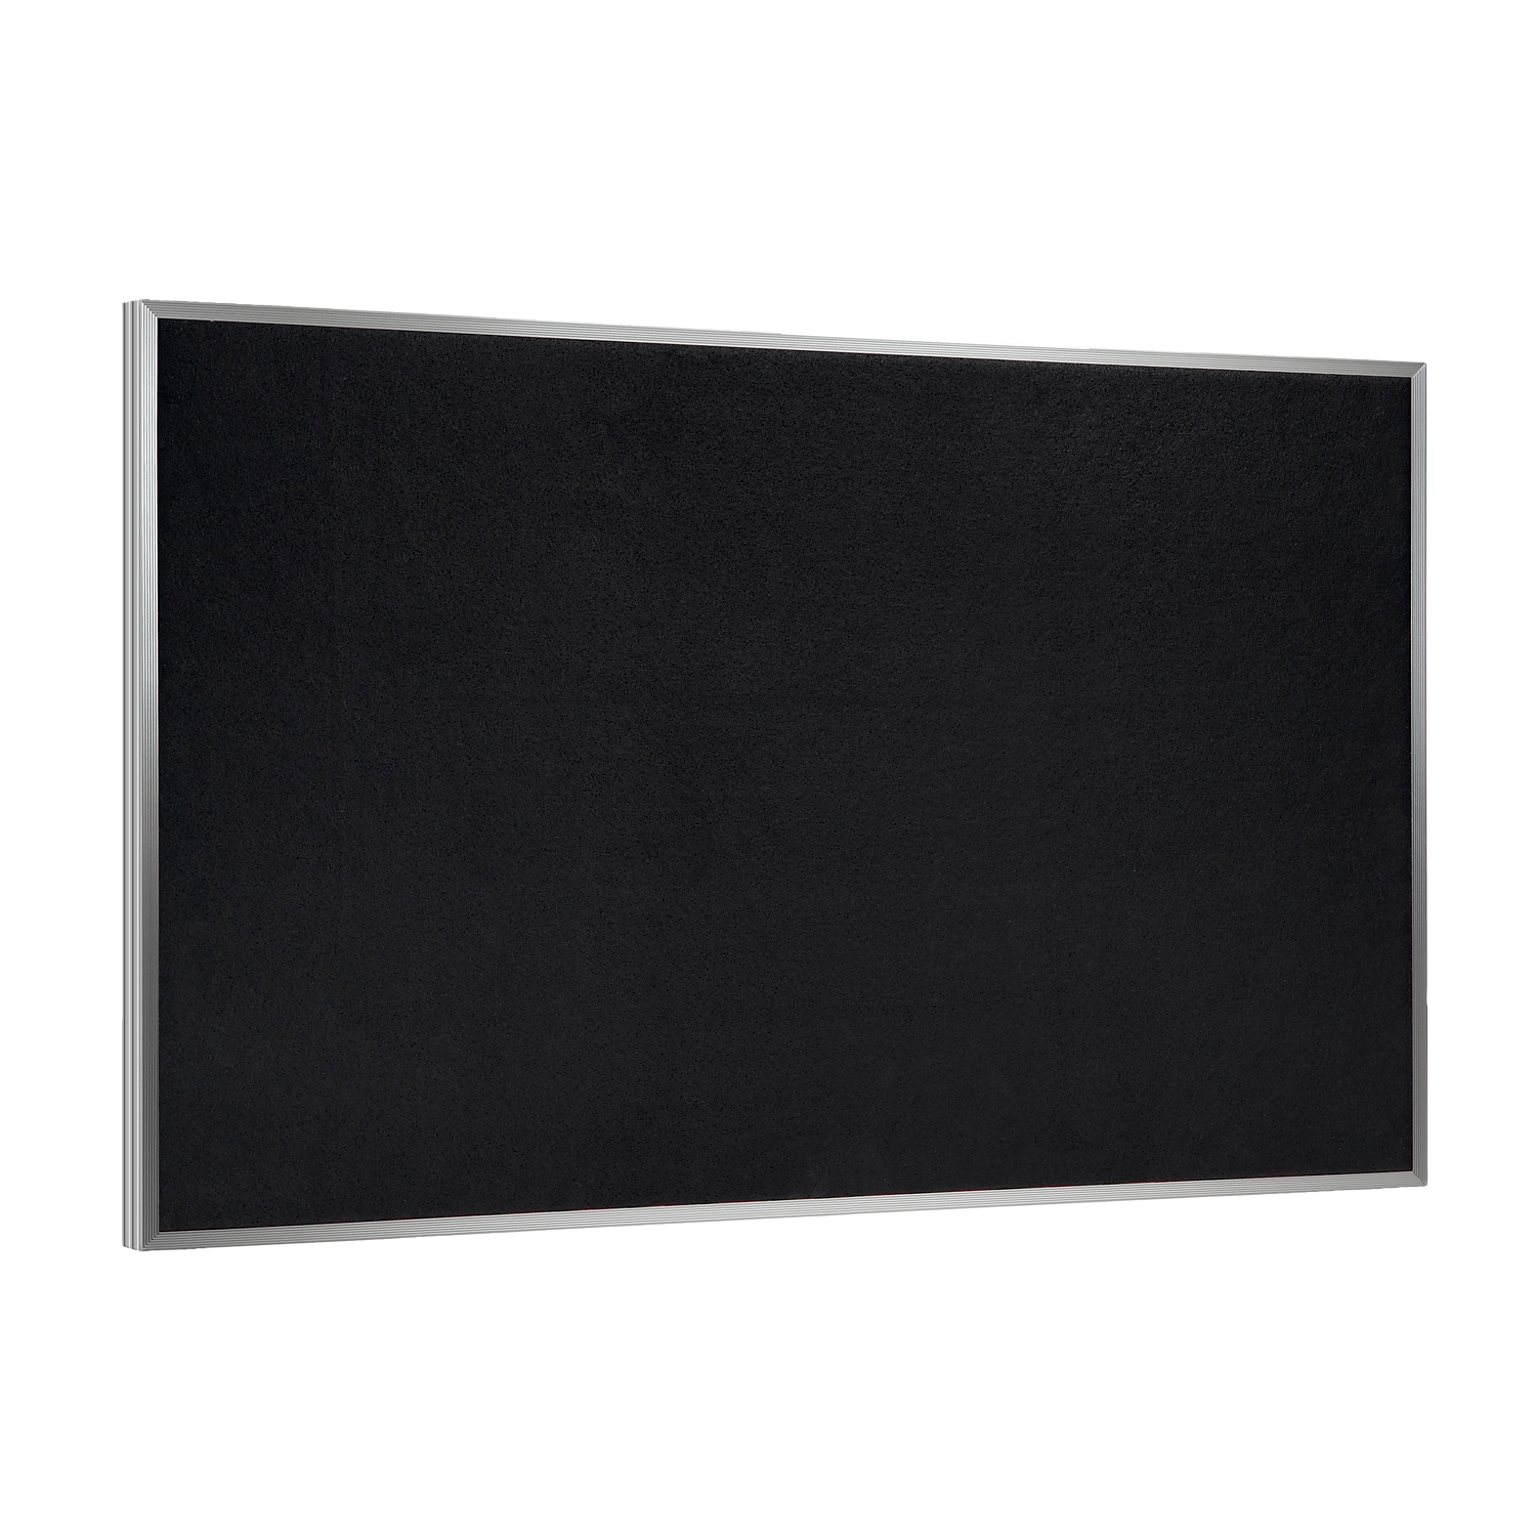 Ghent 4 H x 6 W Recycled Bulletin Board with Aluminum Frame, Black (ATR46-BK)